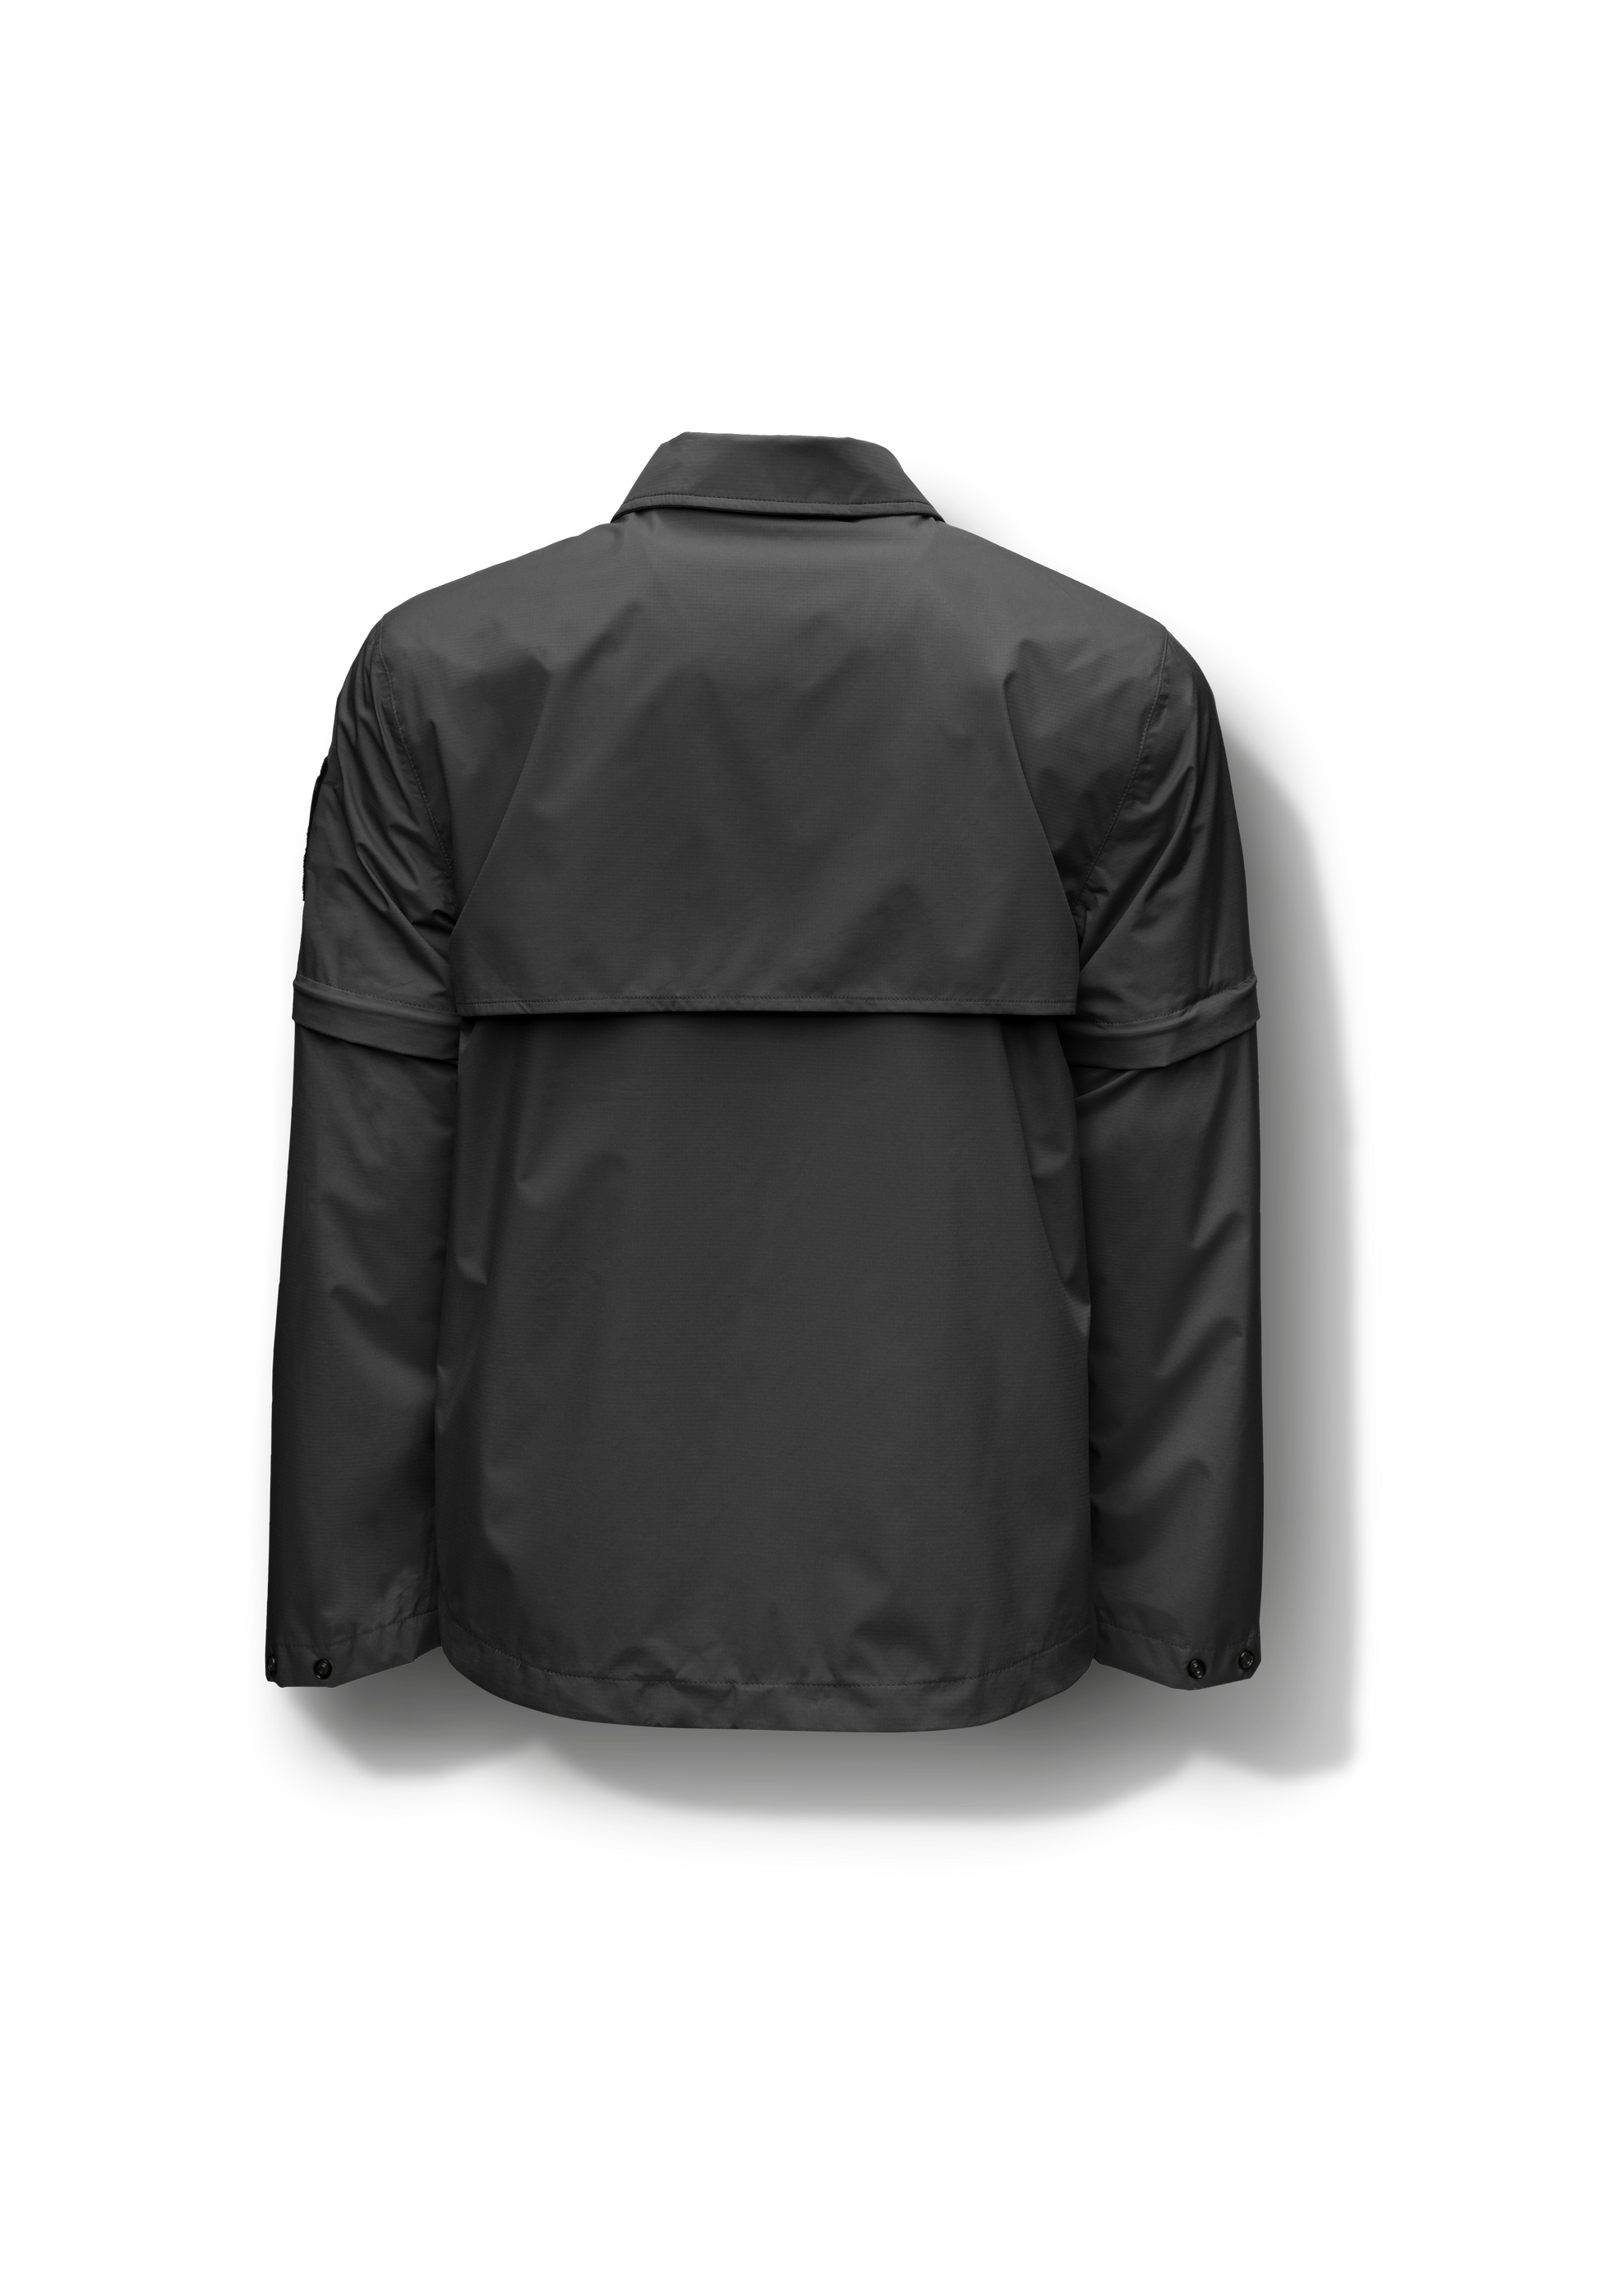 Thurlow Men's Performance Zip Off Sleeve Rain Shirt in hip length, convertible collar, patch chest zipper pockets, hidden in-seam pockets, zip off sleeves, centre front two-way zipper closure, in Black